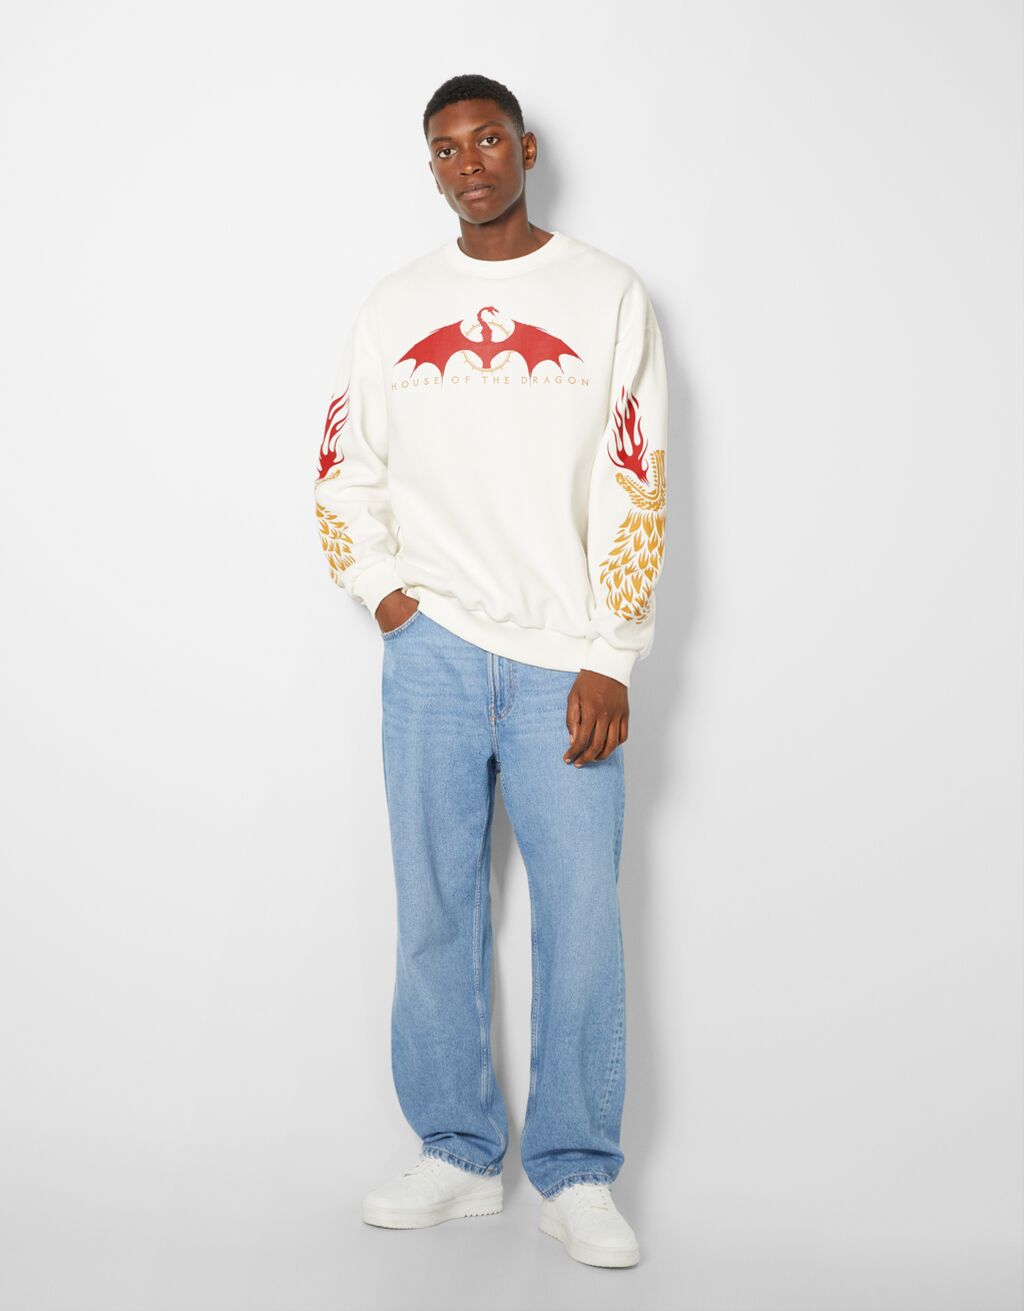 Oversize round neck House of Dragons sweatshirt